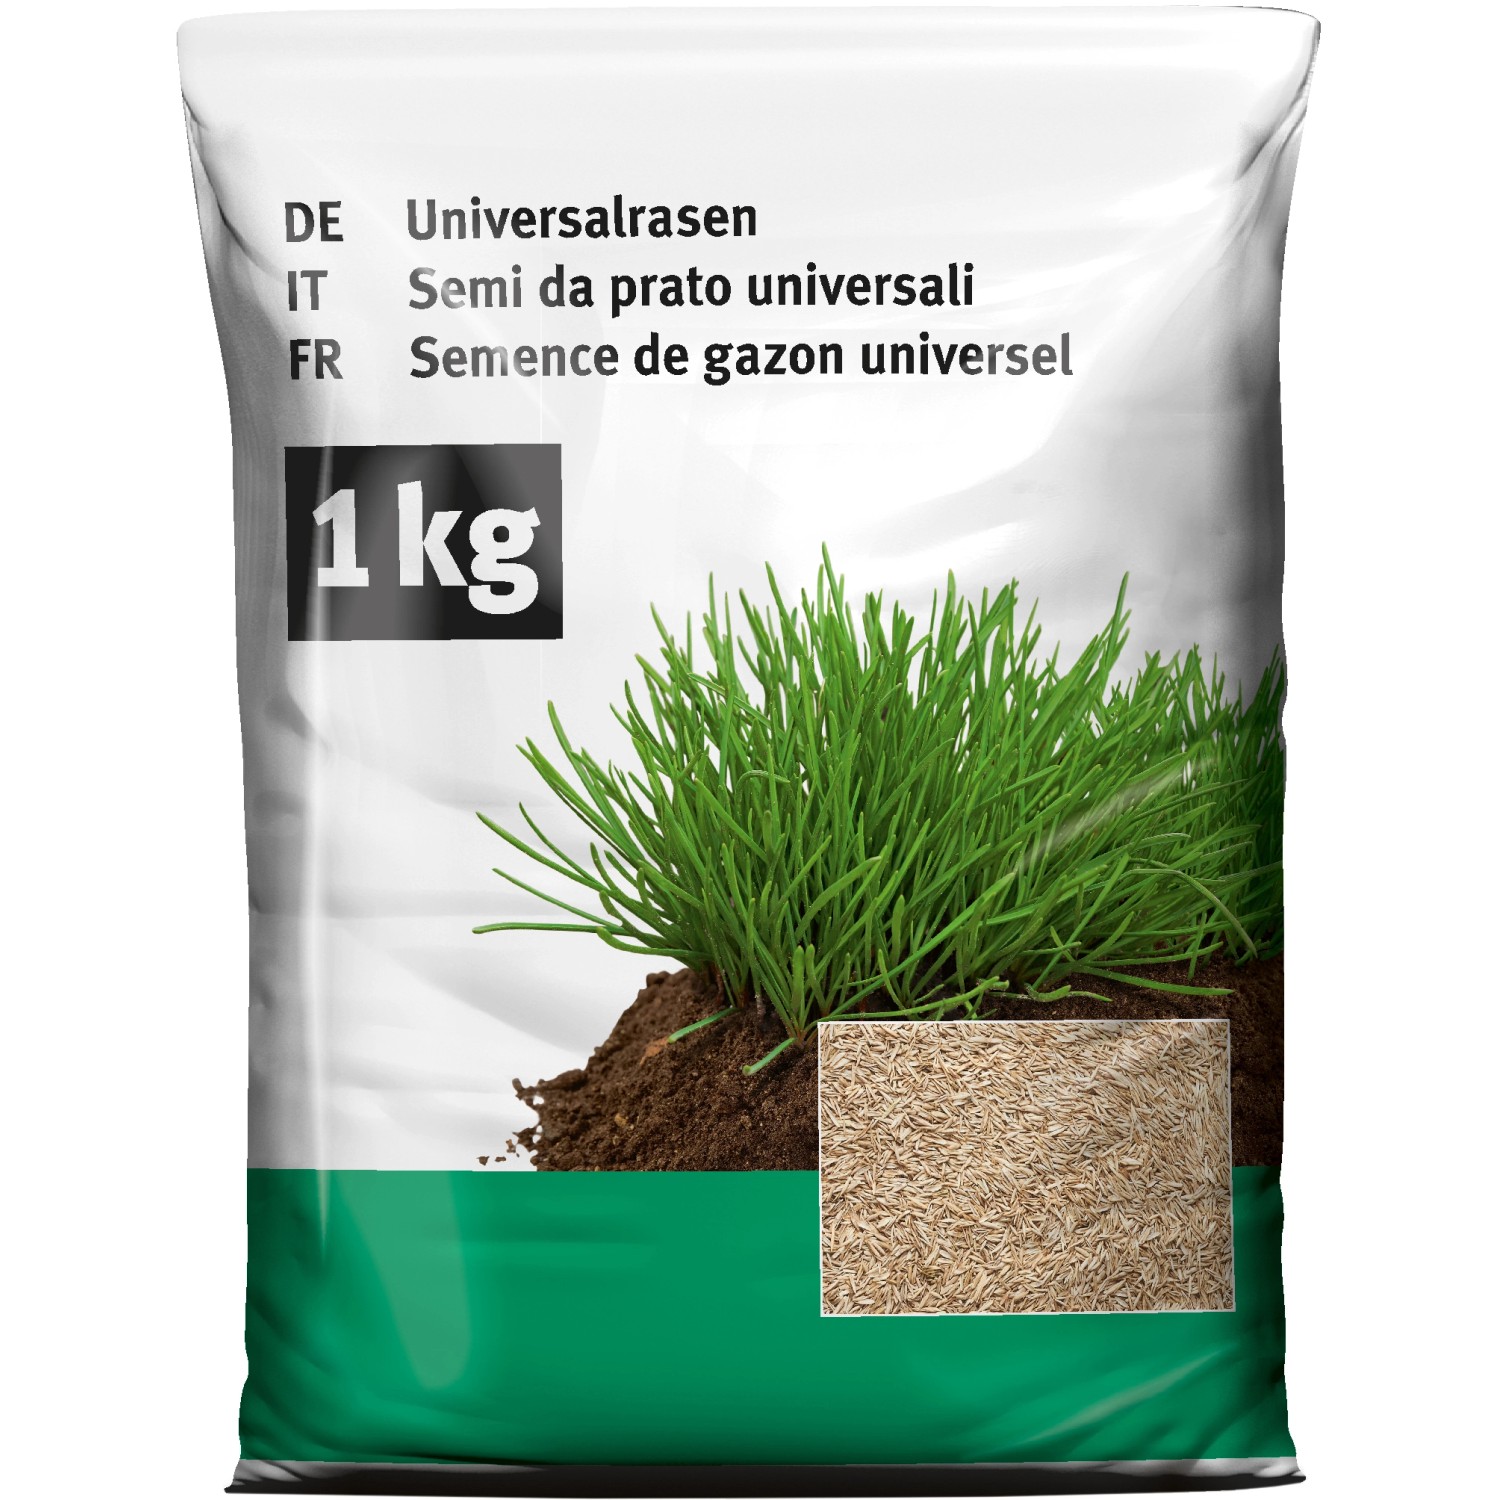 Universal Rasen 1 kg